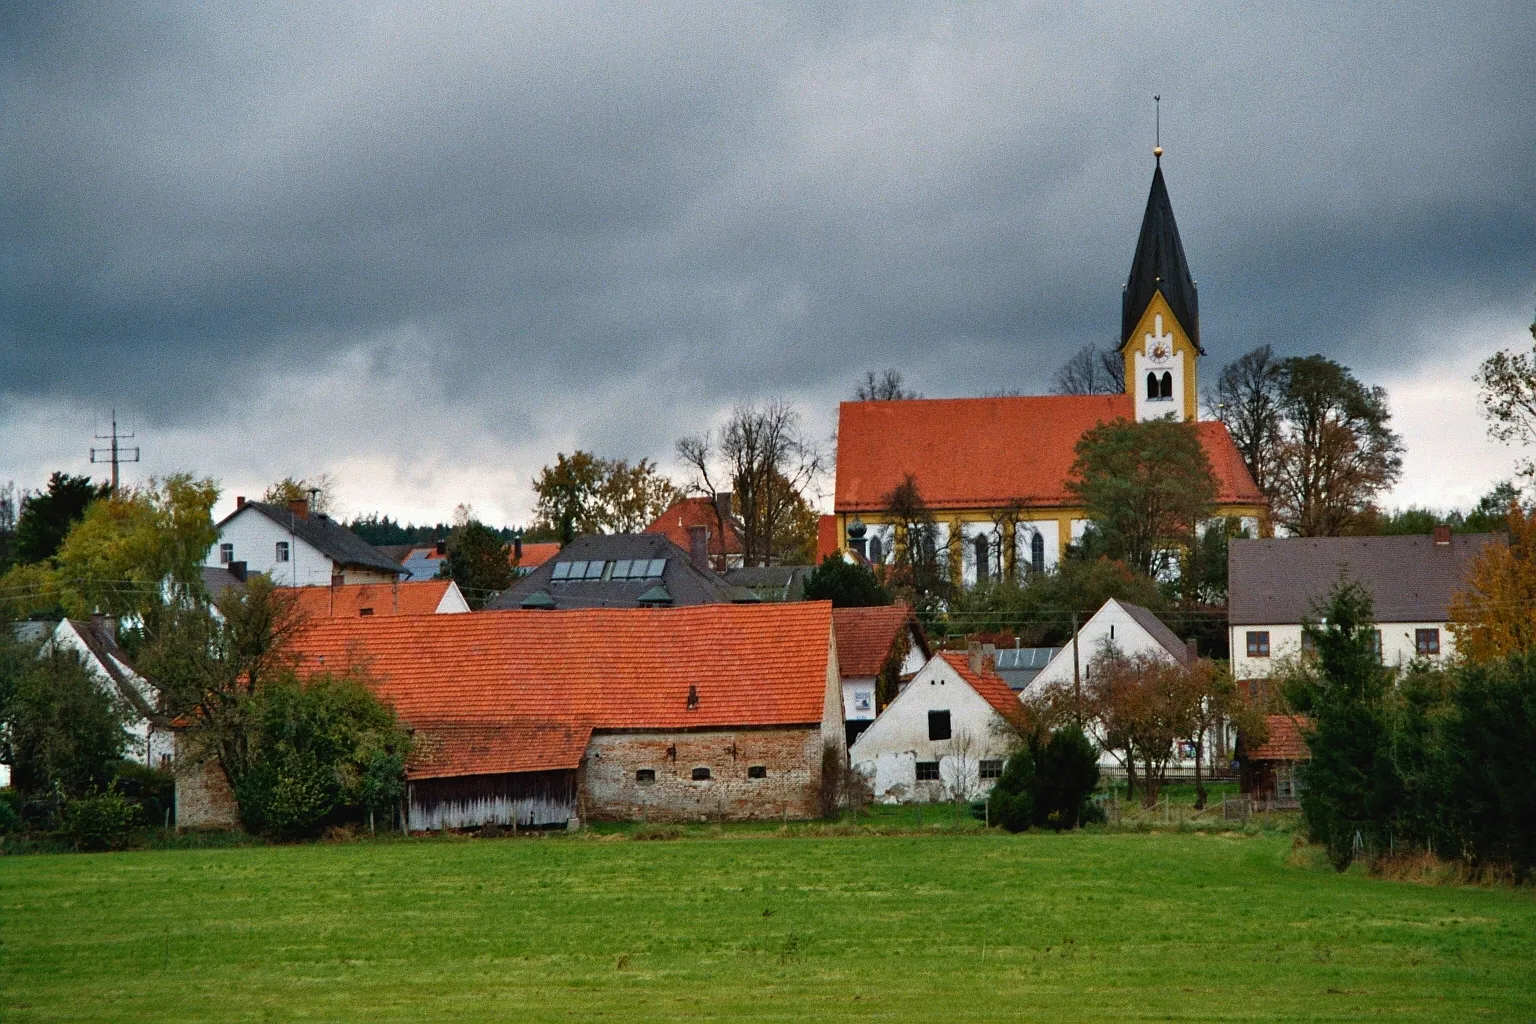 Image of Ehekirchen